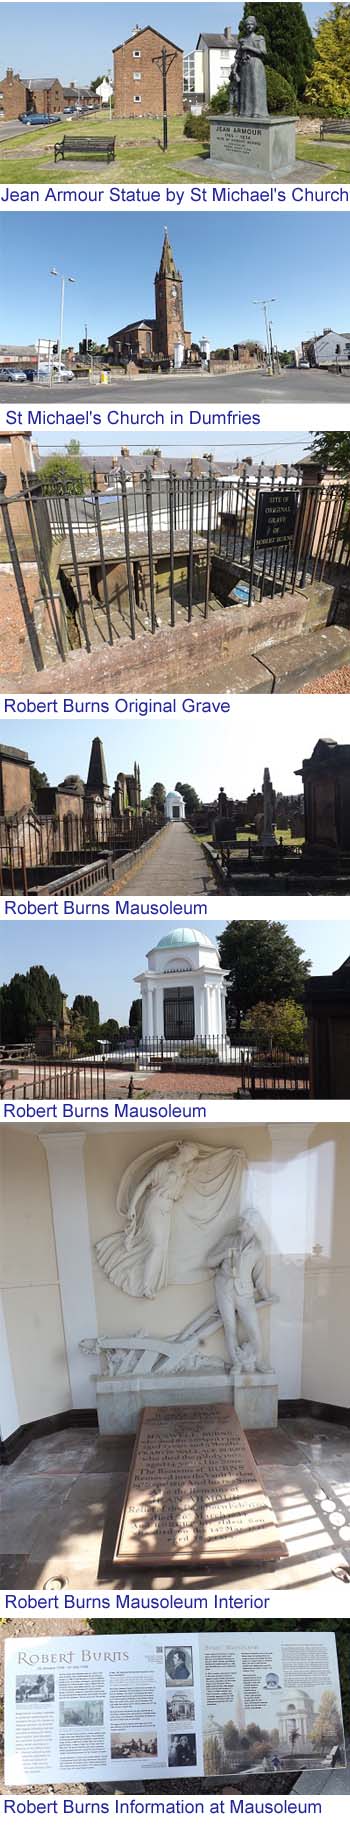 Robert Burns Grave Images